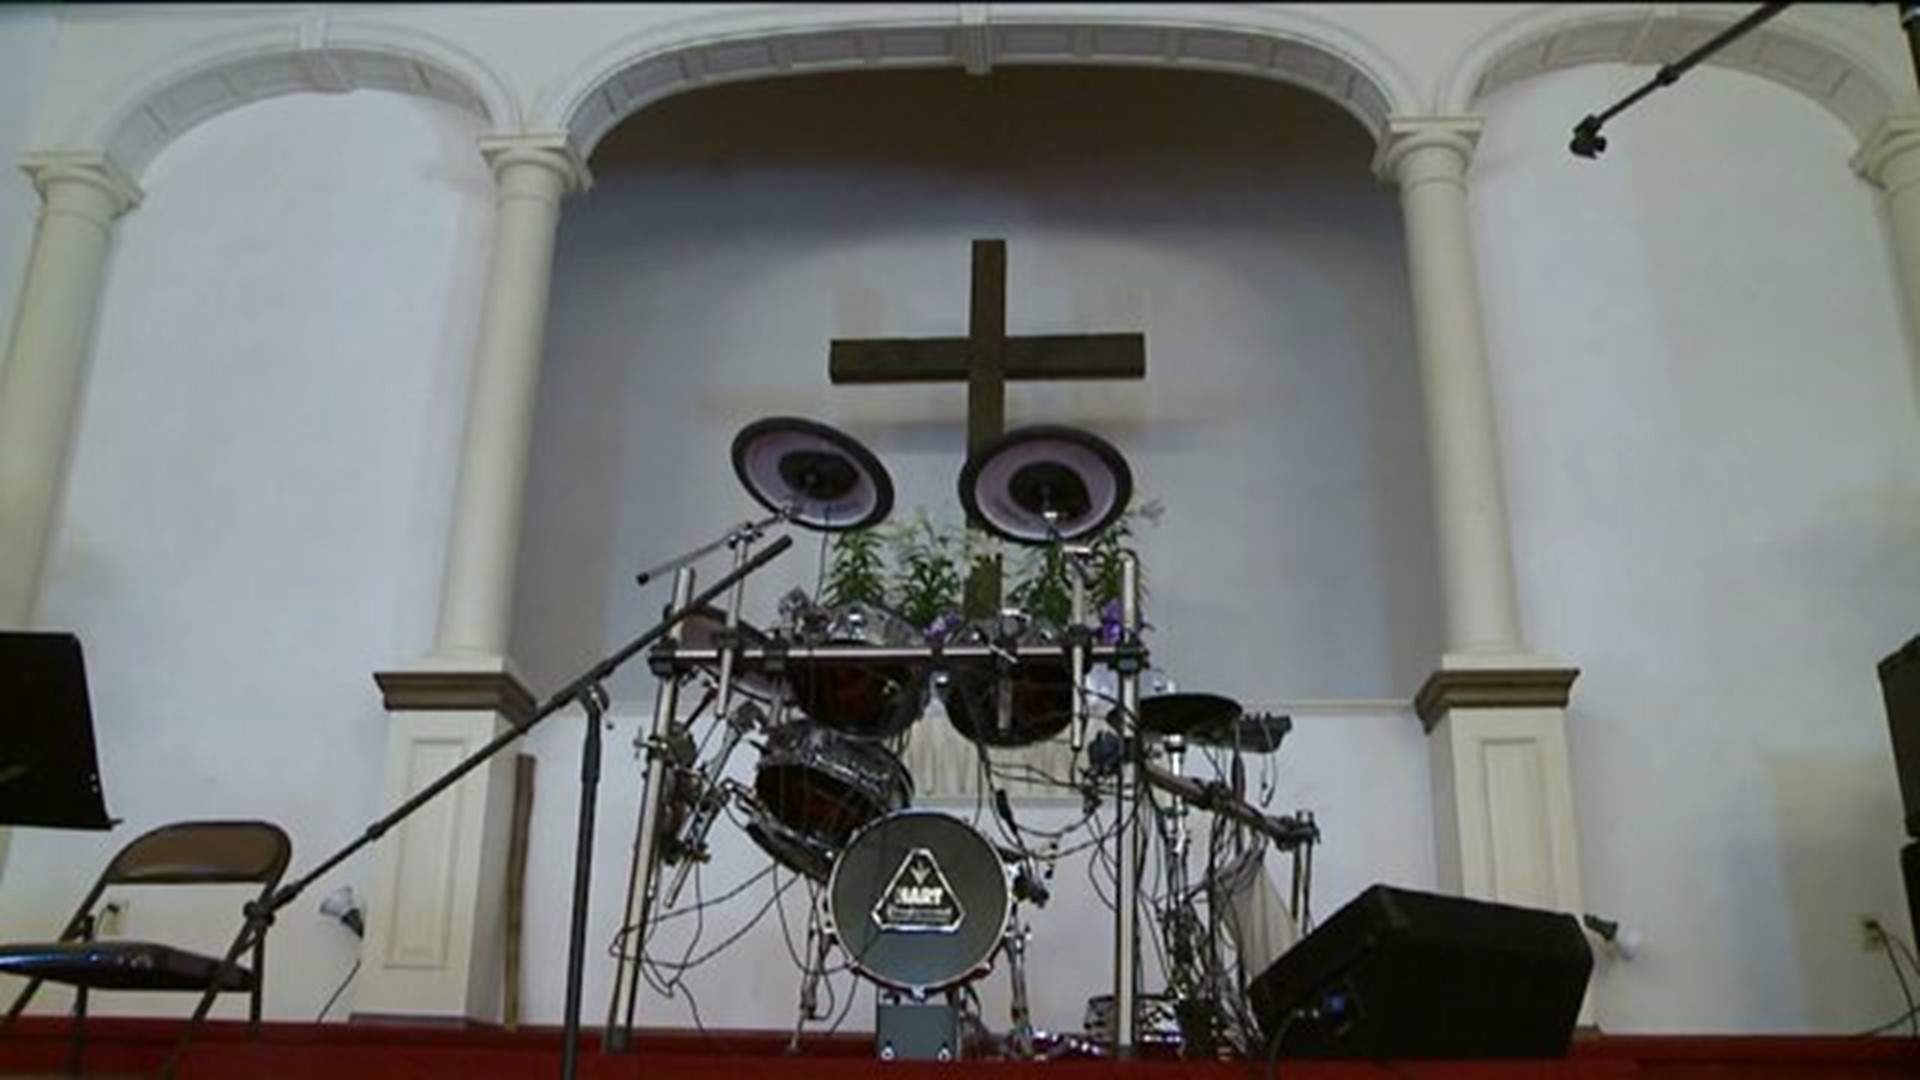 Musical Instruments Stolen From Church